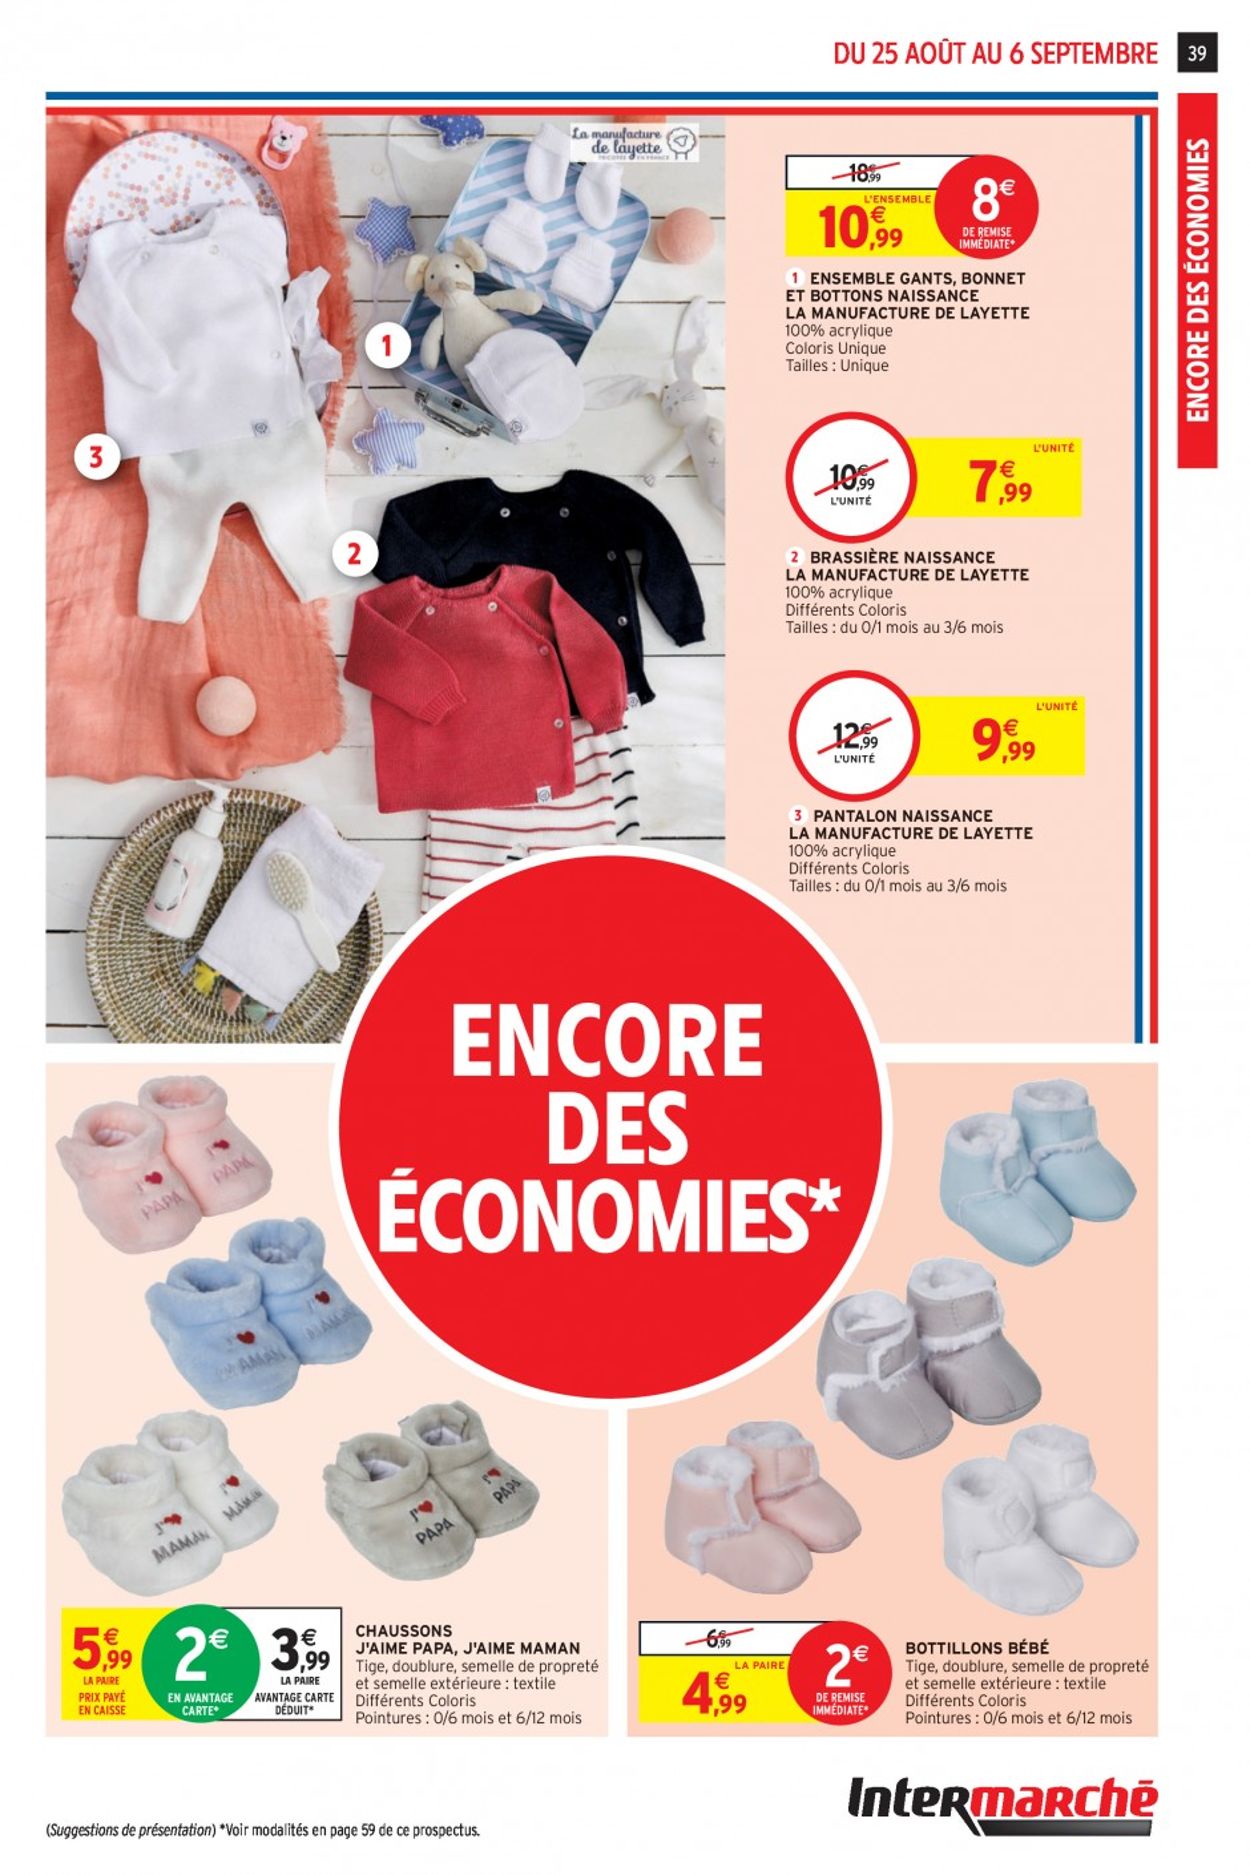 Intermarché Catalogue - 25.08-06.09.2020 (Page 39)